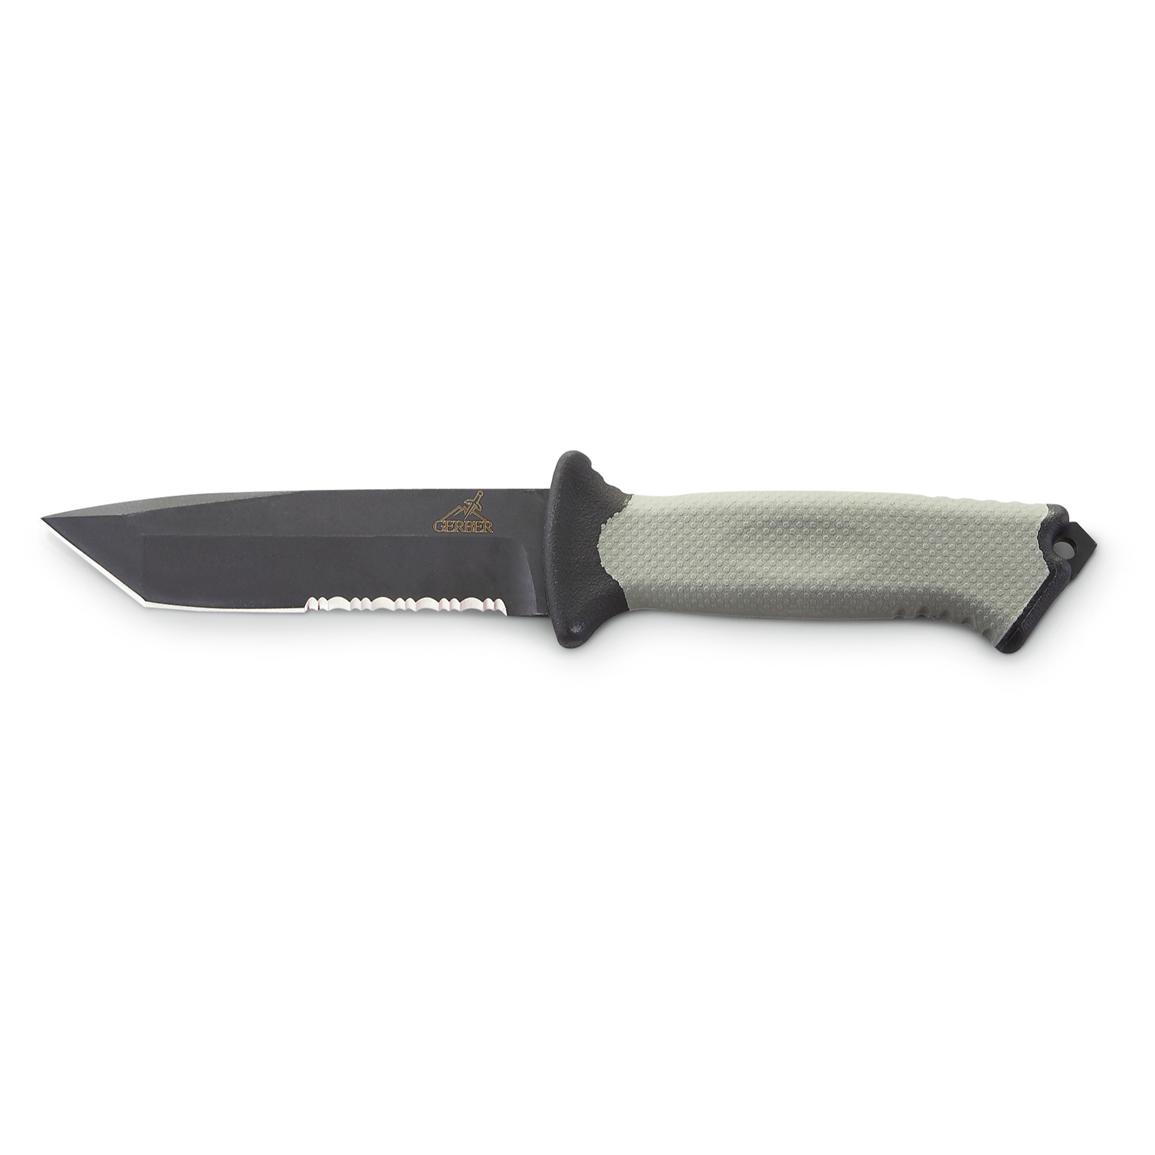 Gerber® Prodigy Knife, Black - 189725, Tactical Knives at Sportsman's Guide